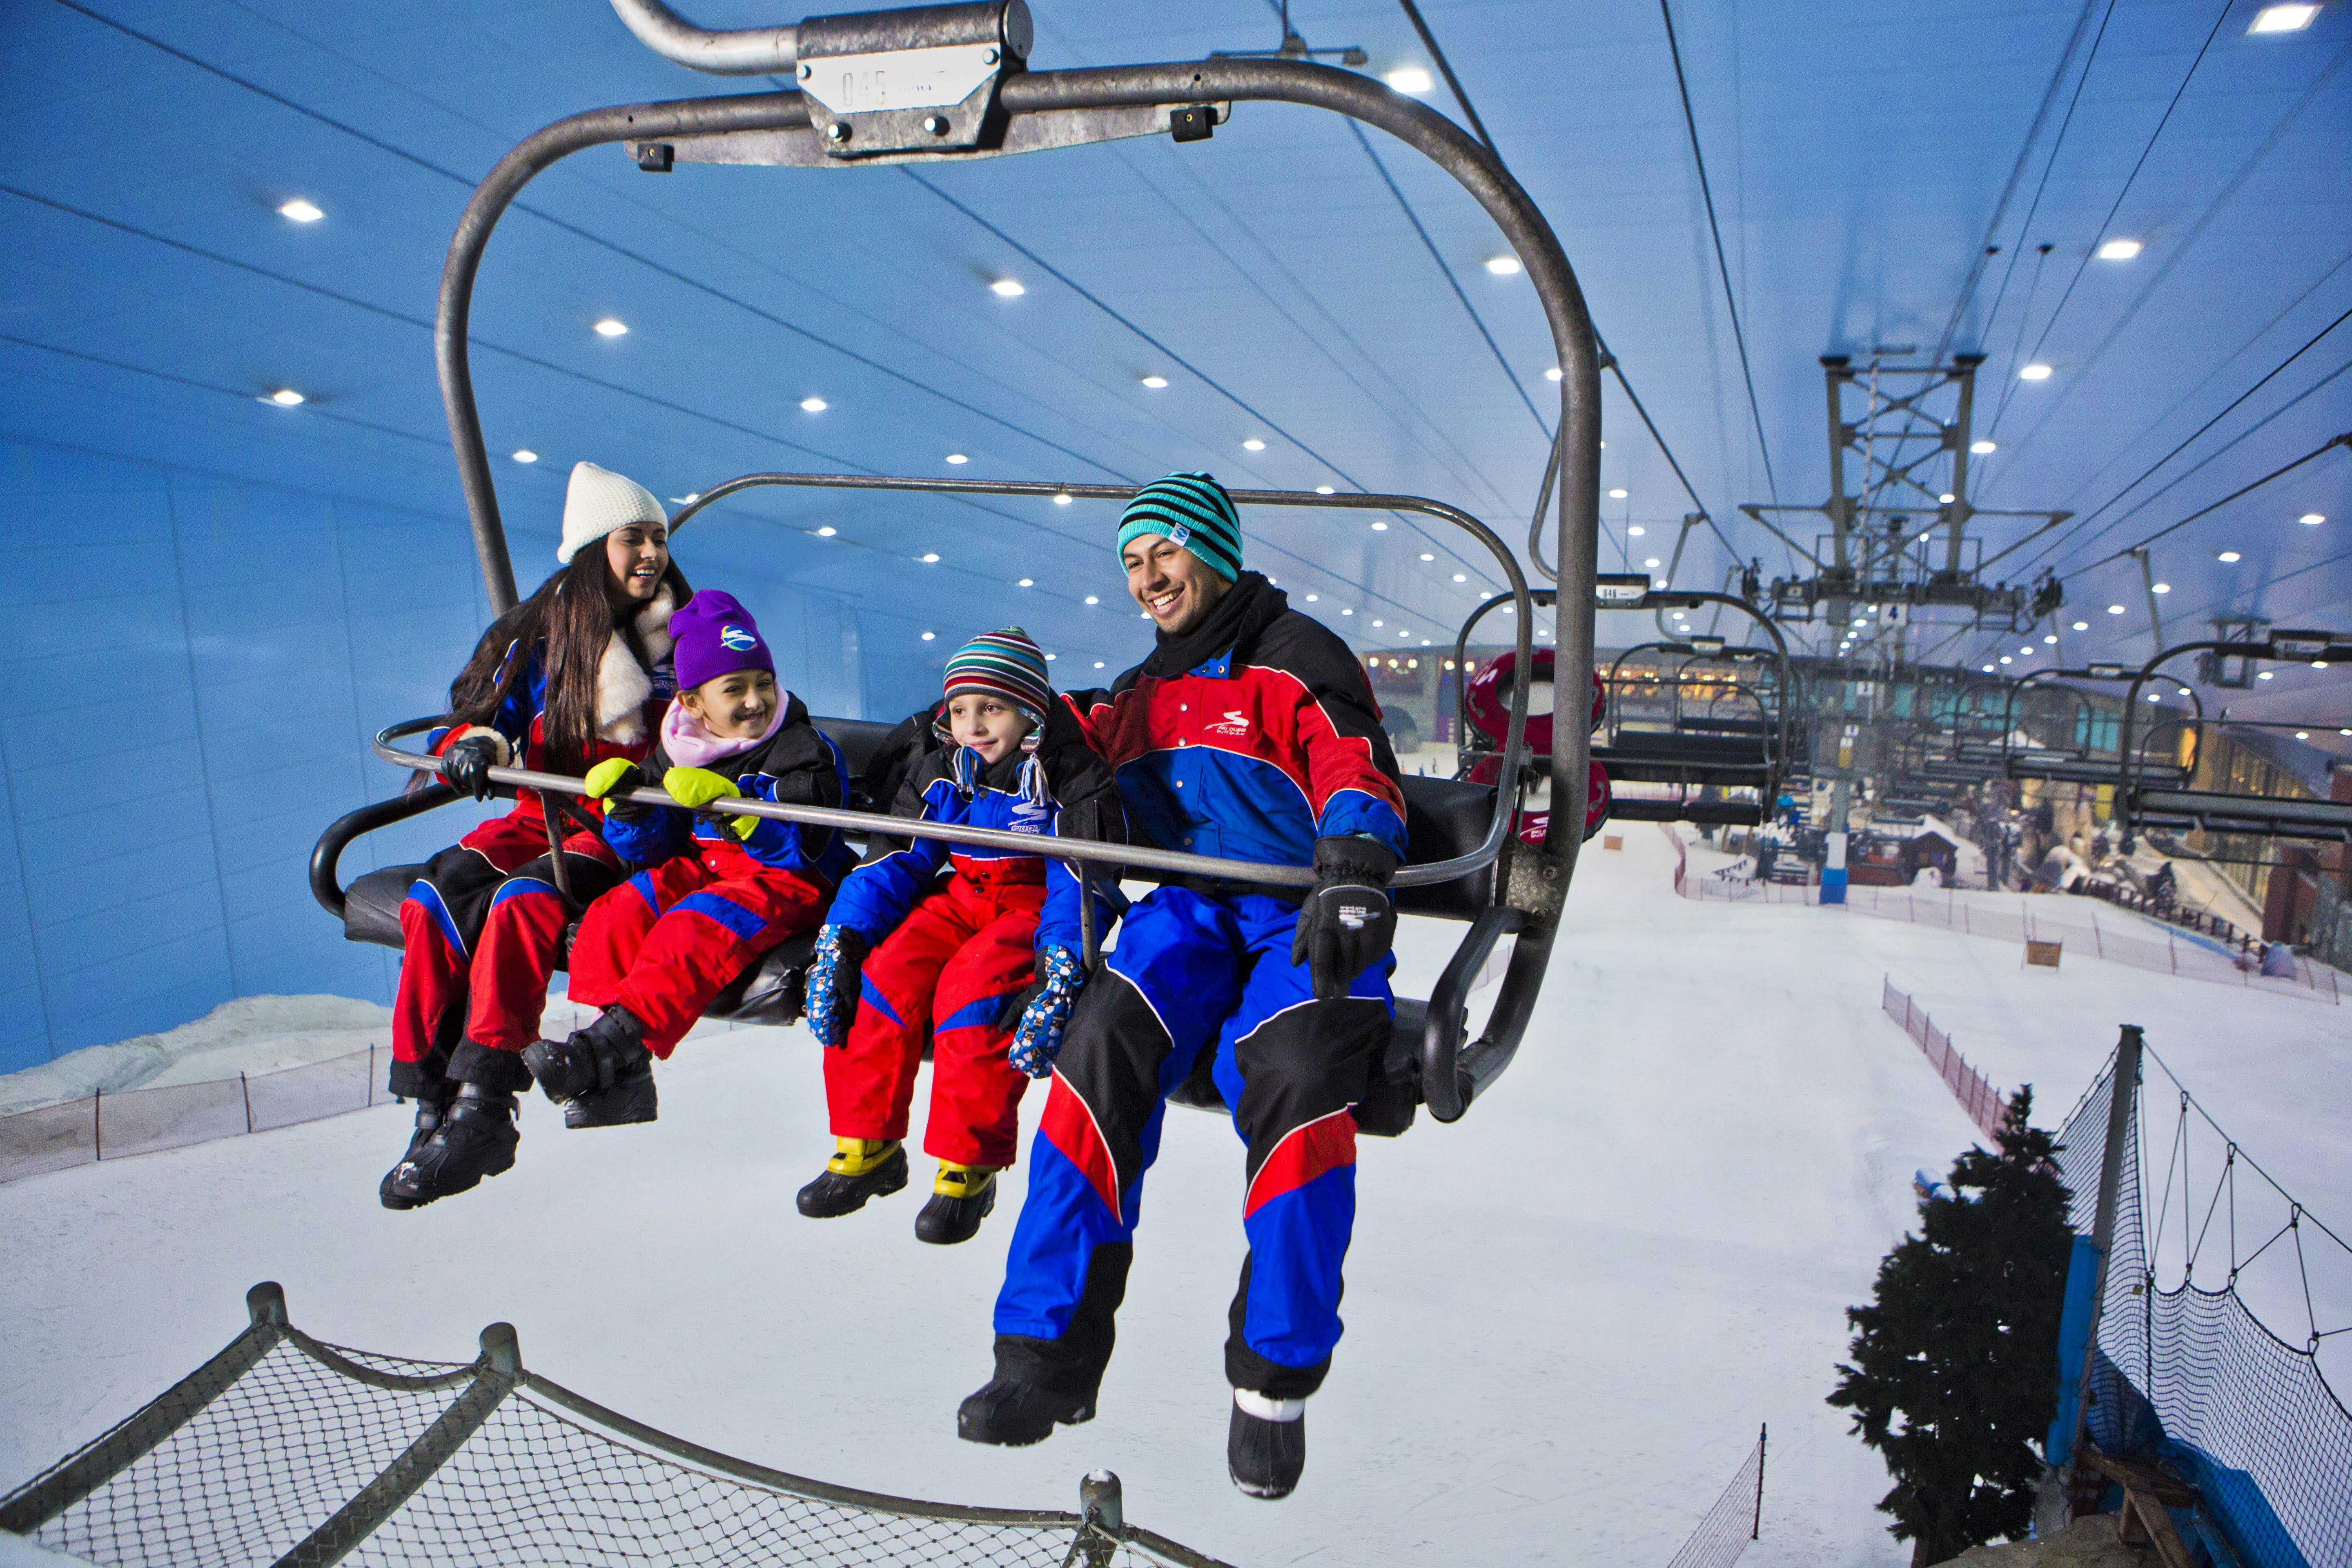 2 hour slope pass at Ski Dubai Musement